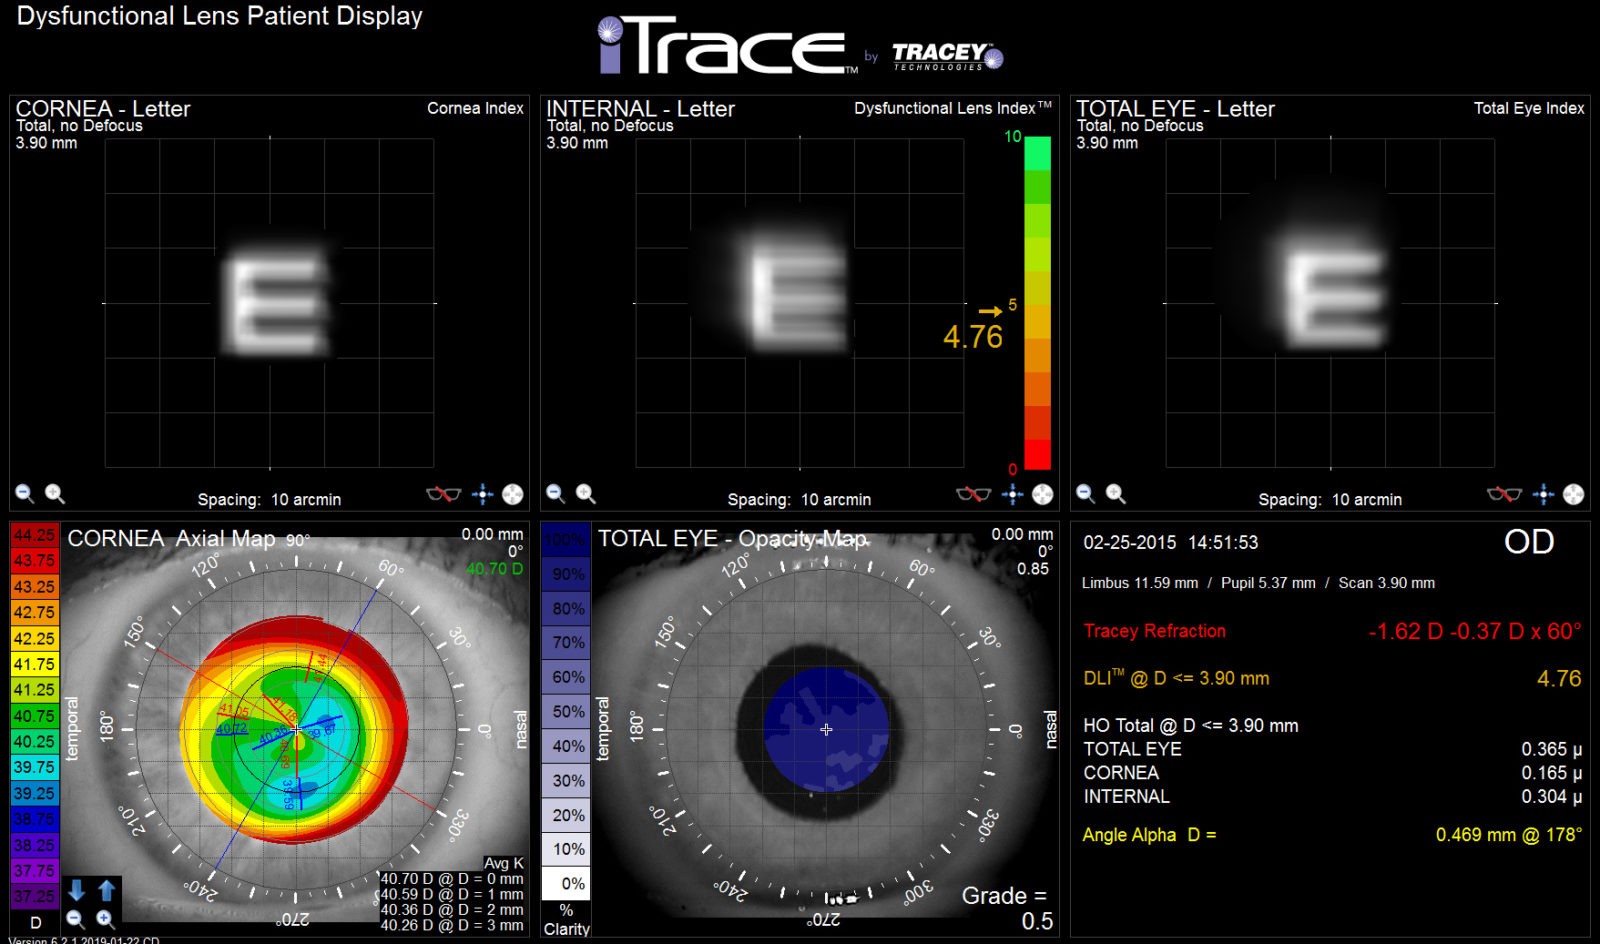 iTrace Eye Scan